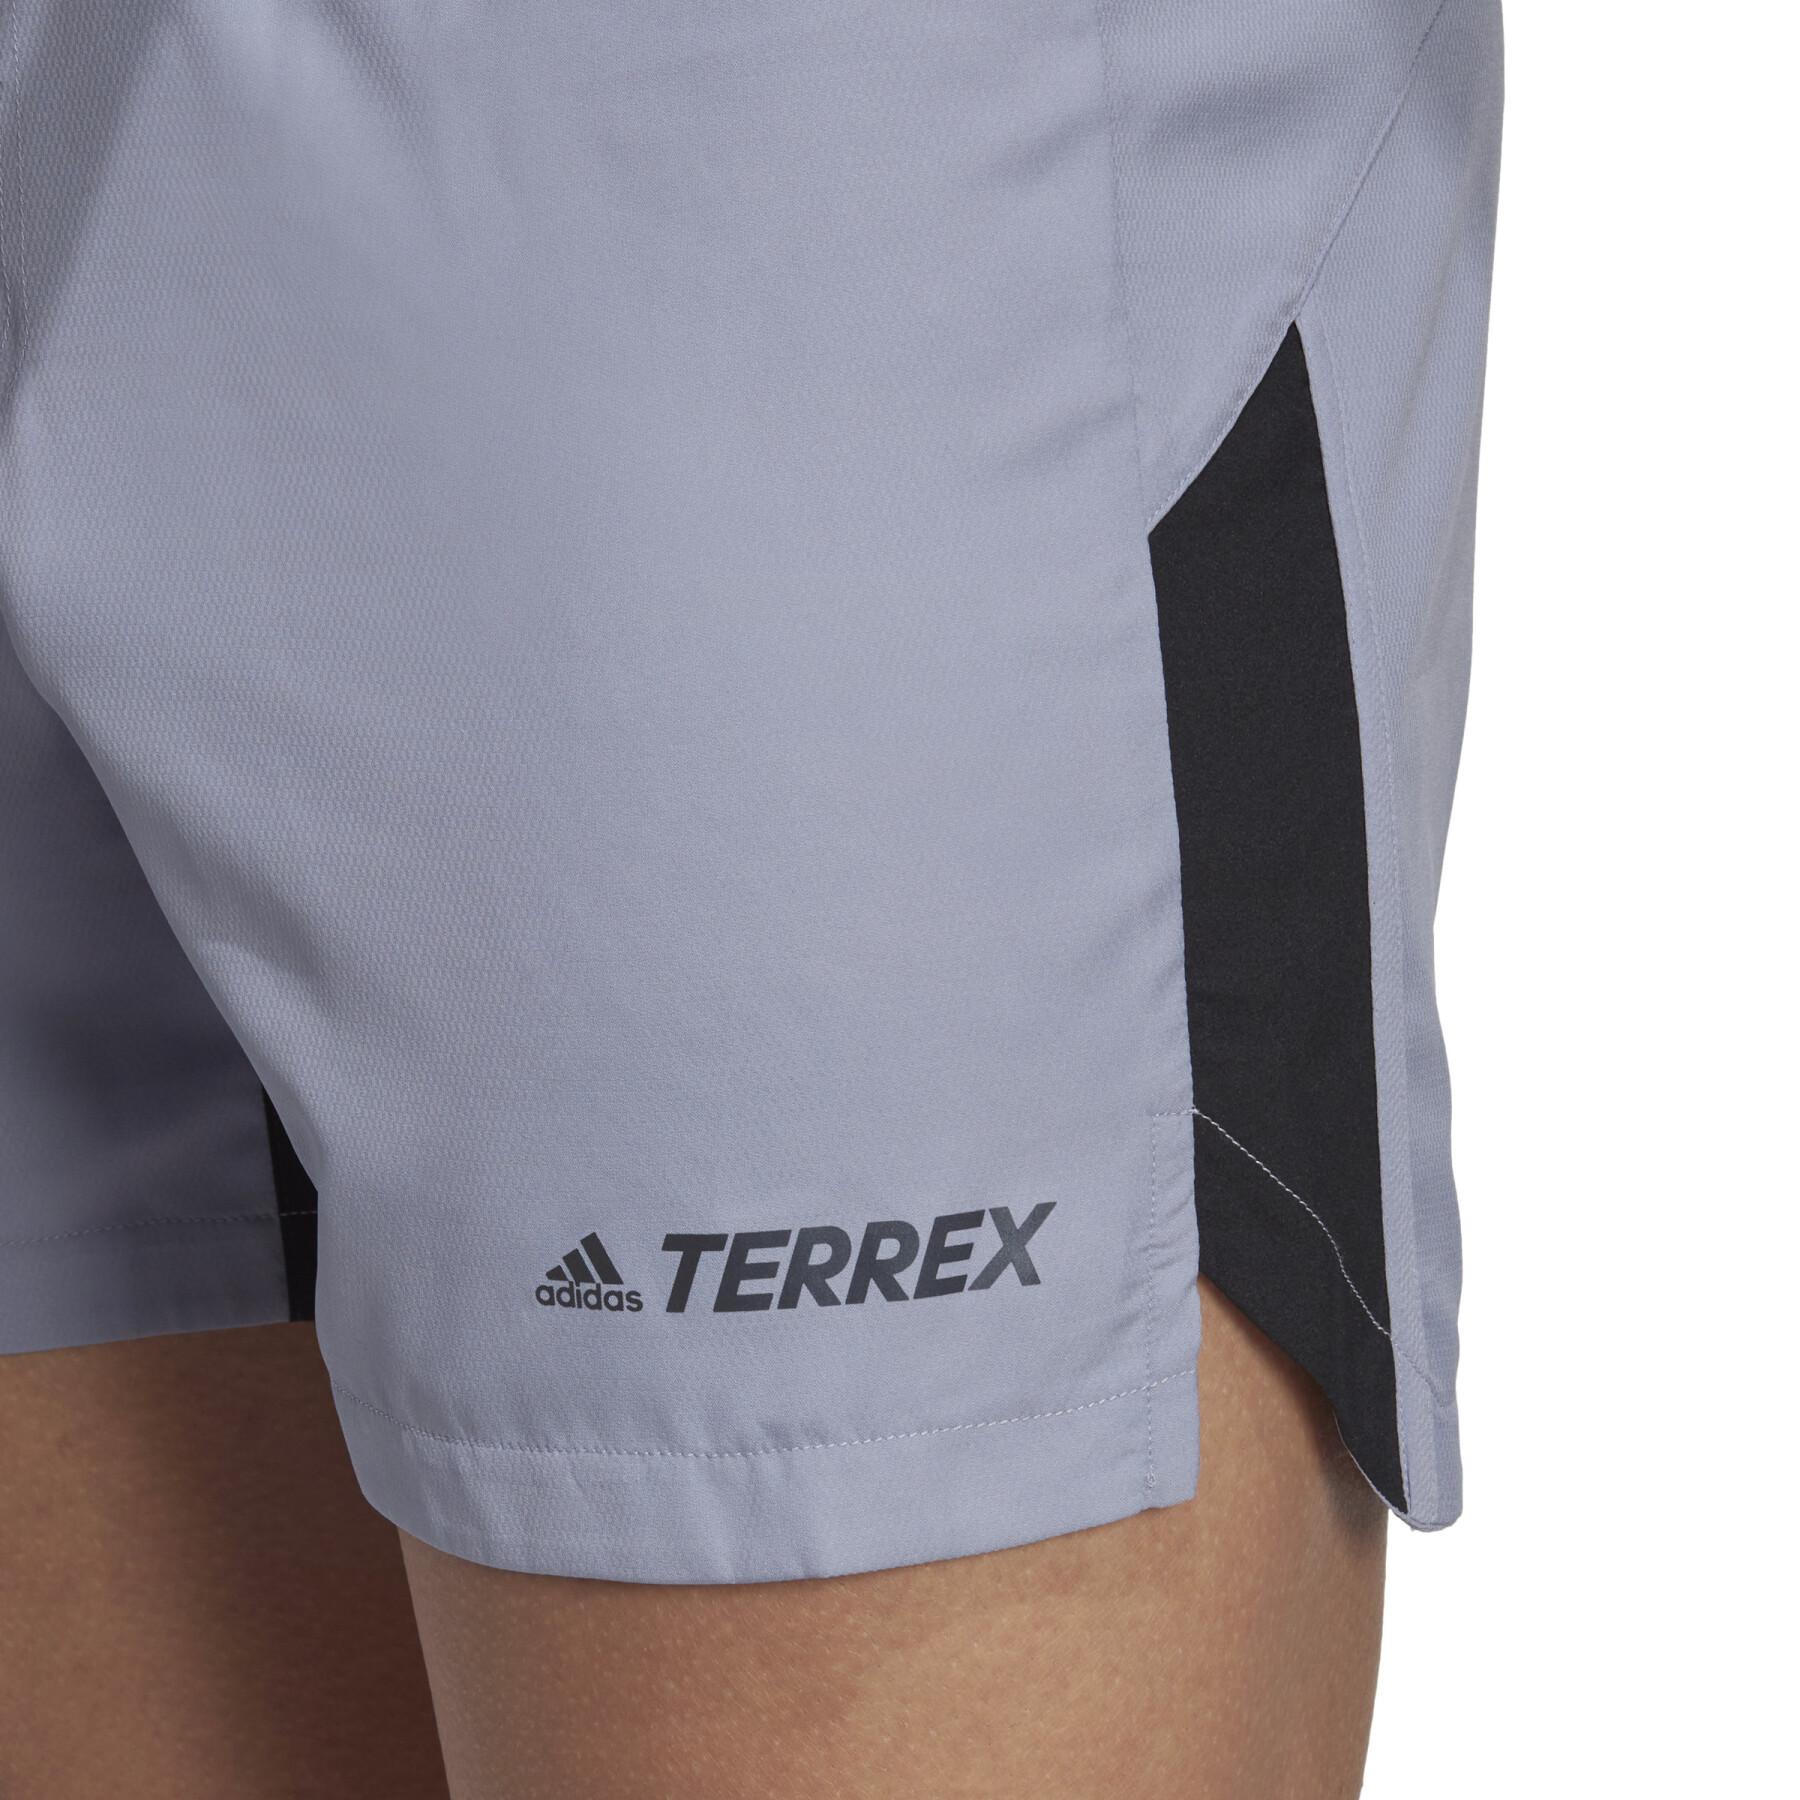 Short adidas Terrex Trail